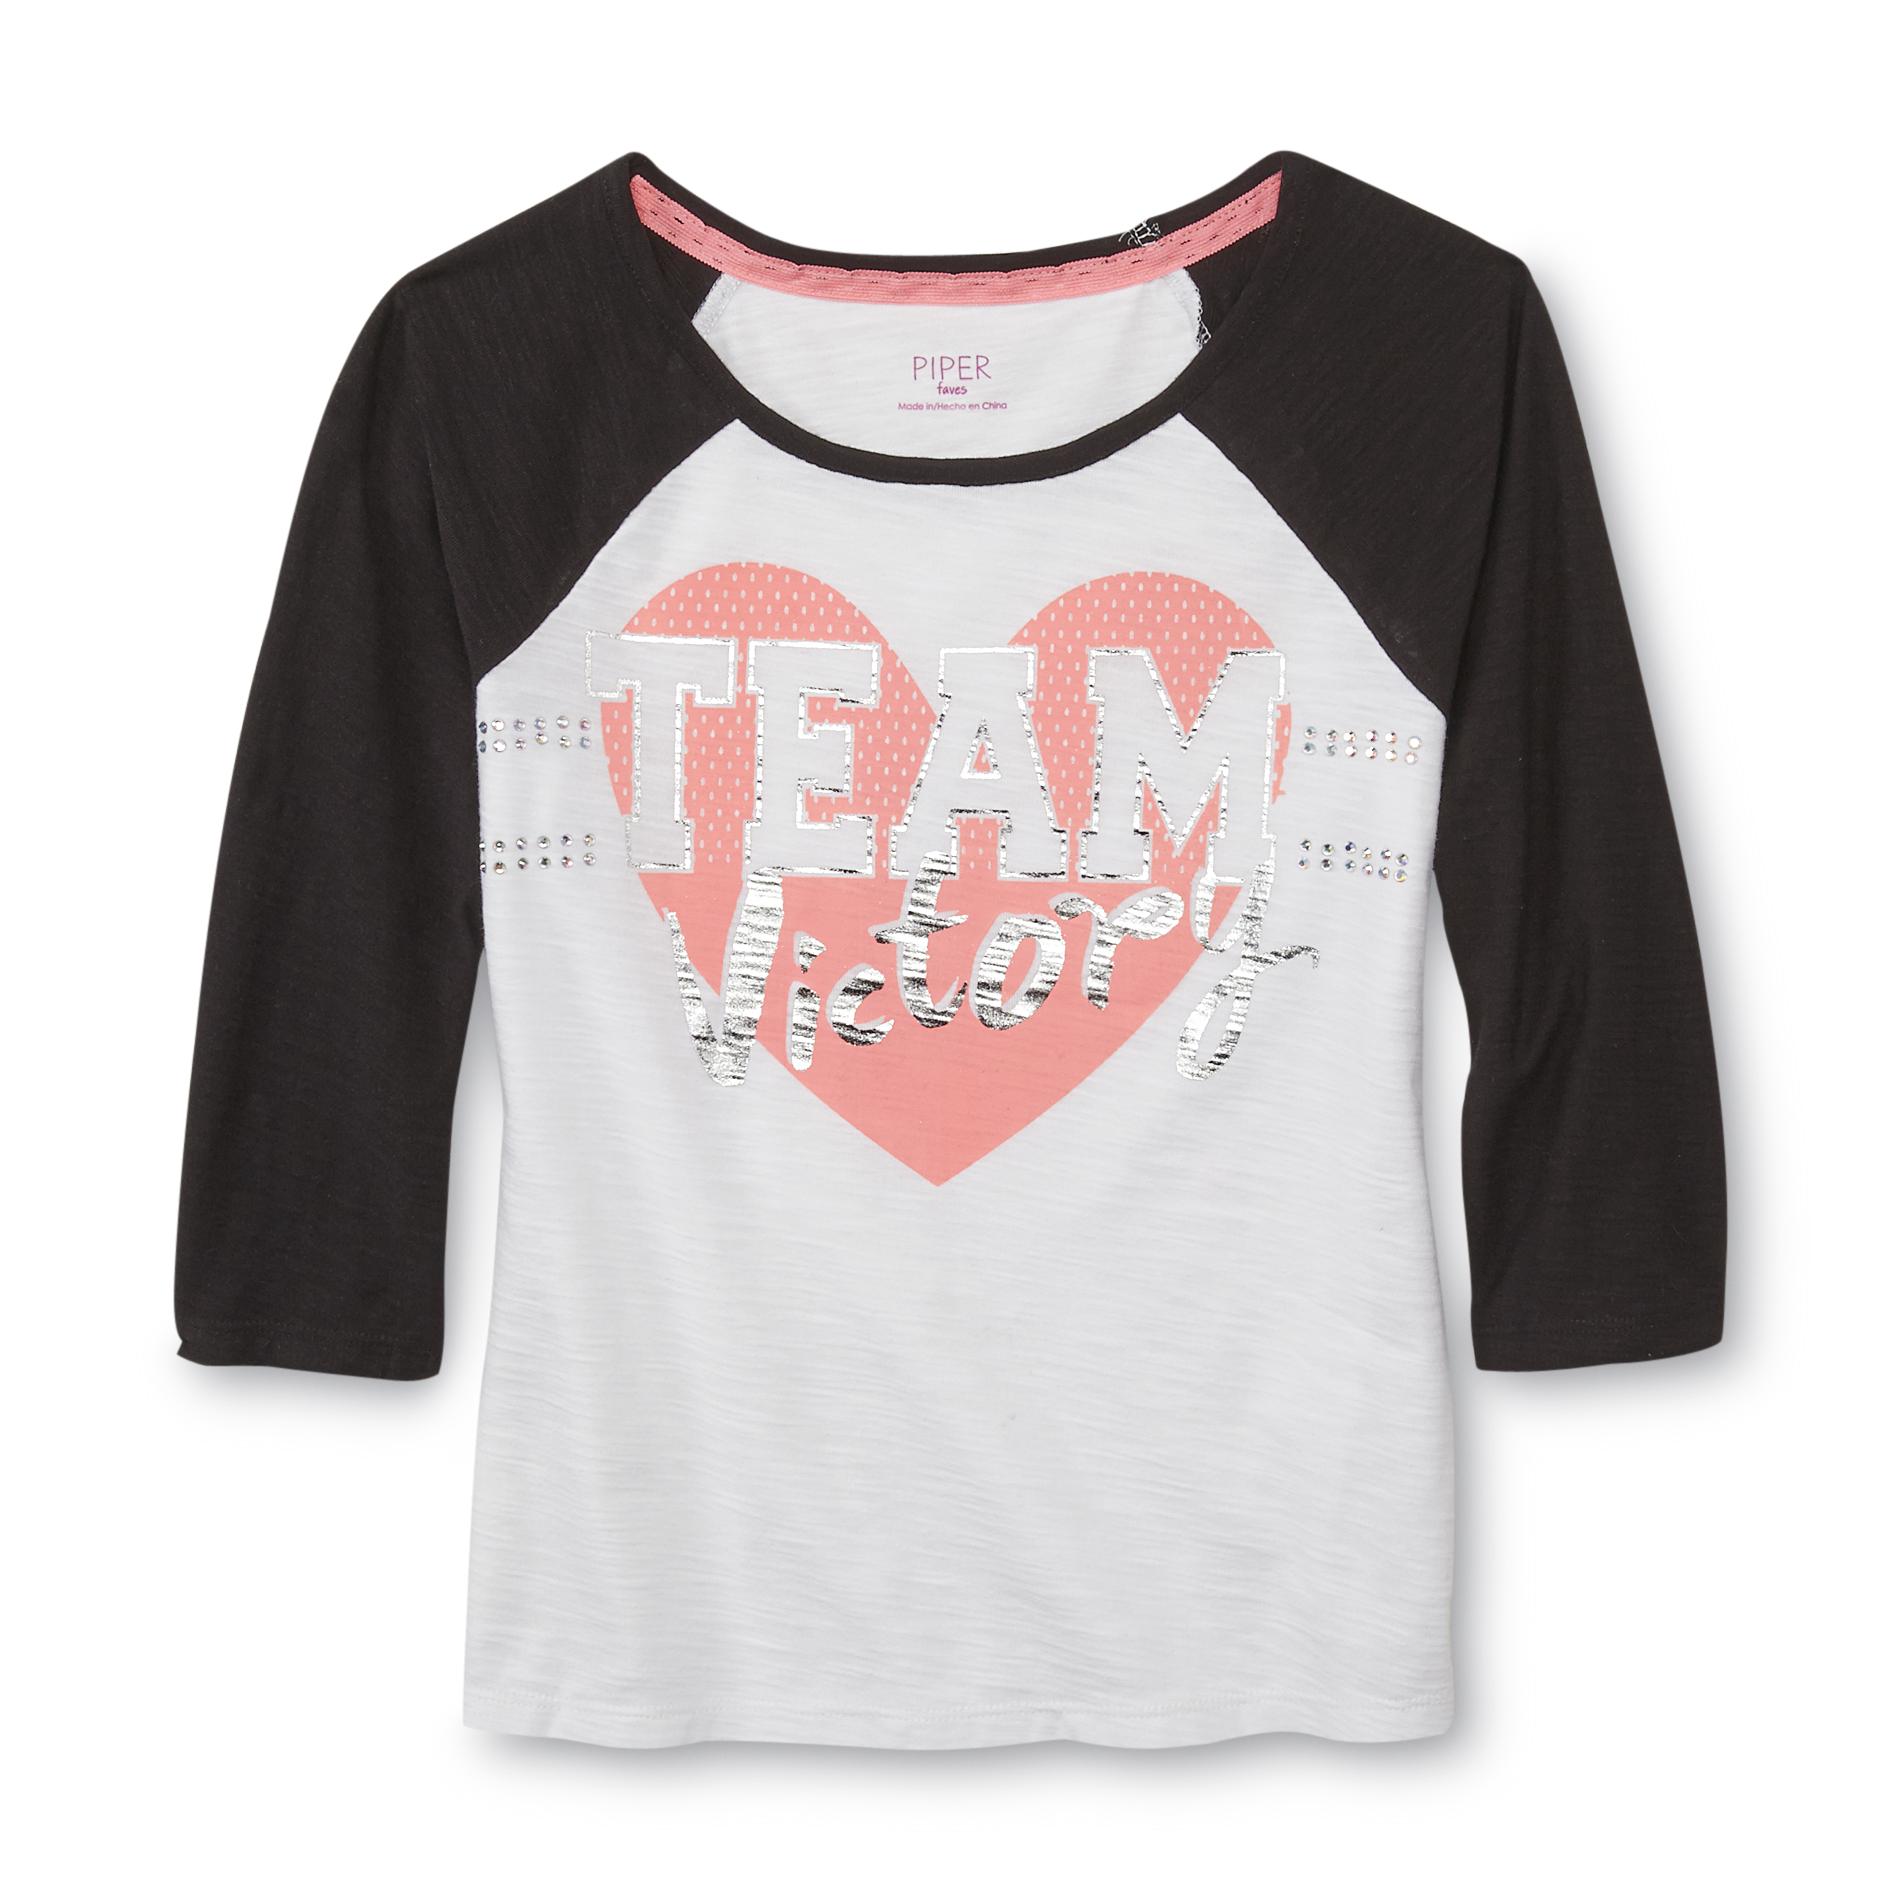 Piper Faves Girl's Raglan T-Shirt - Team Victory